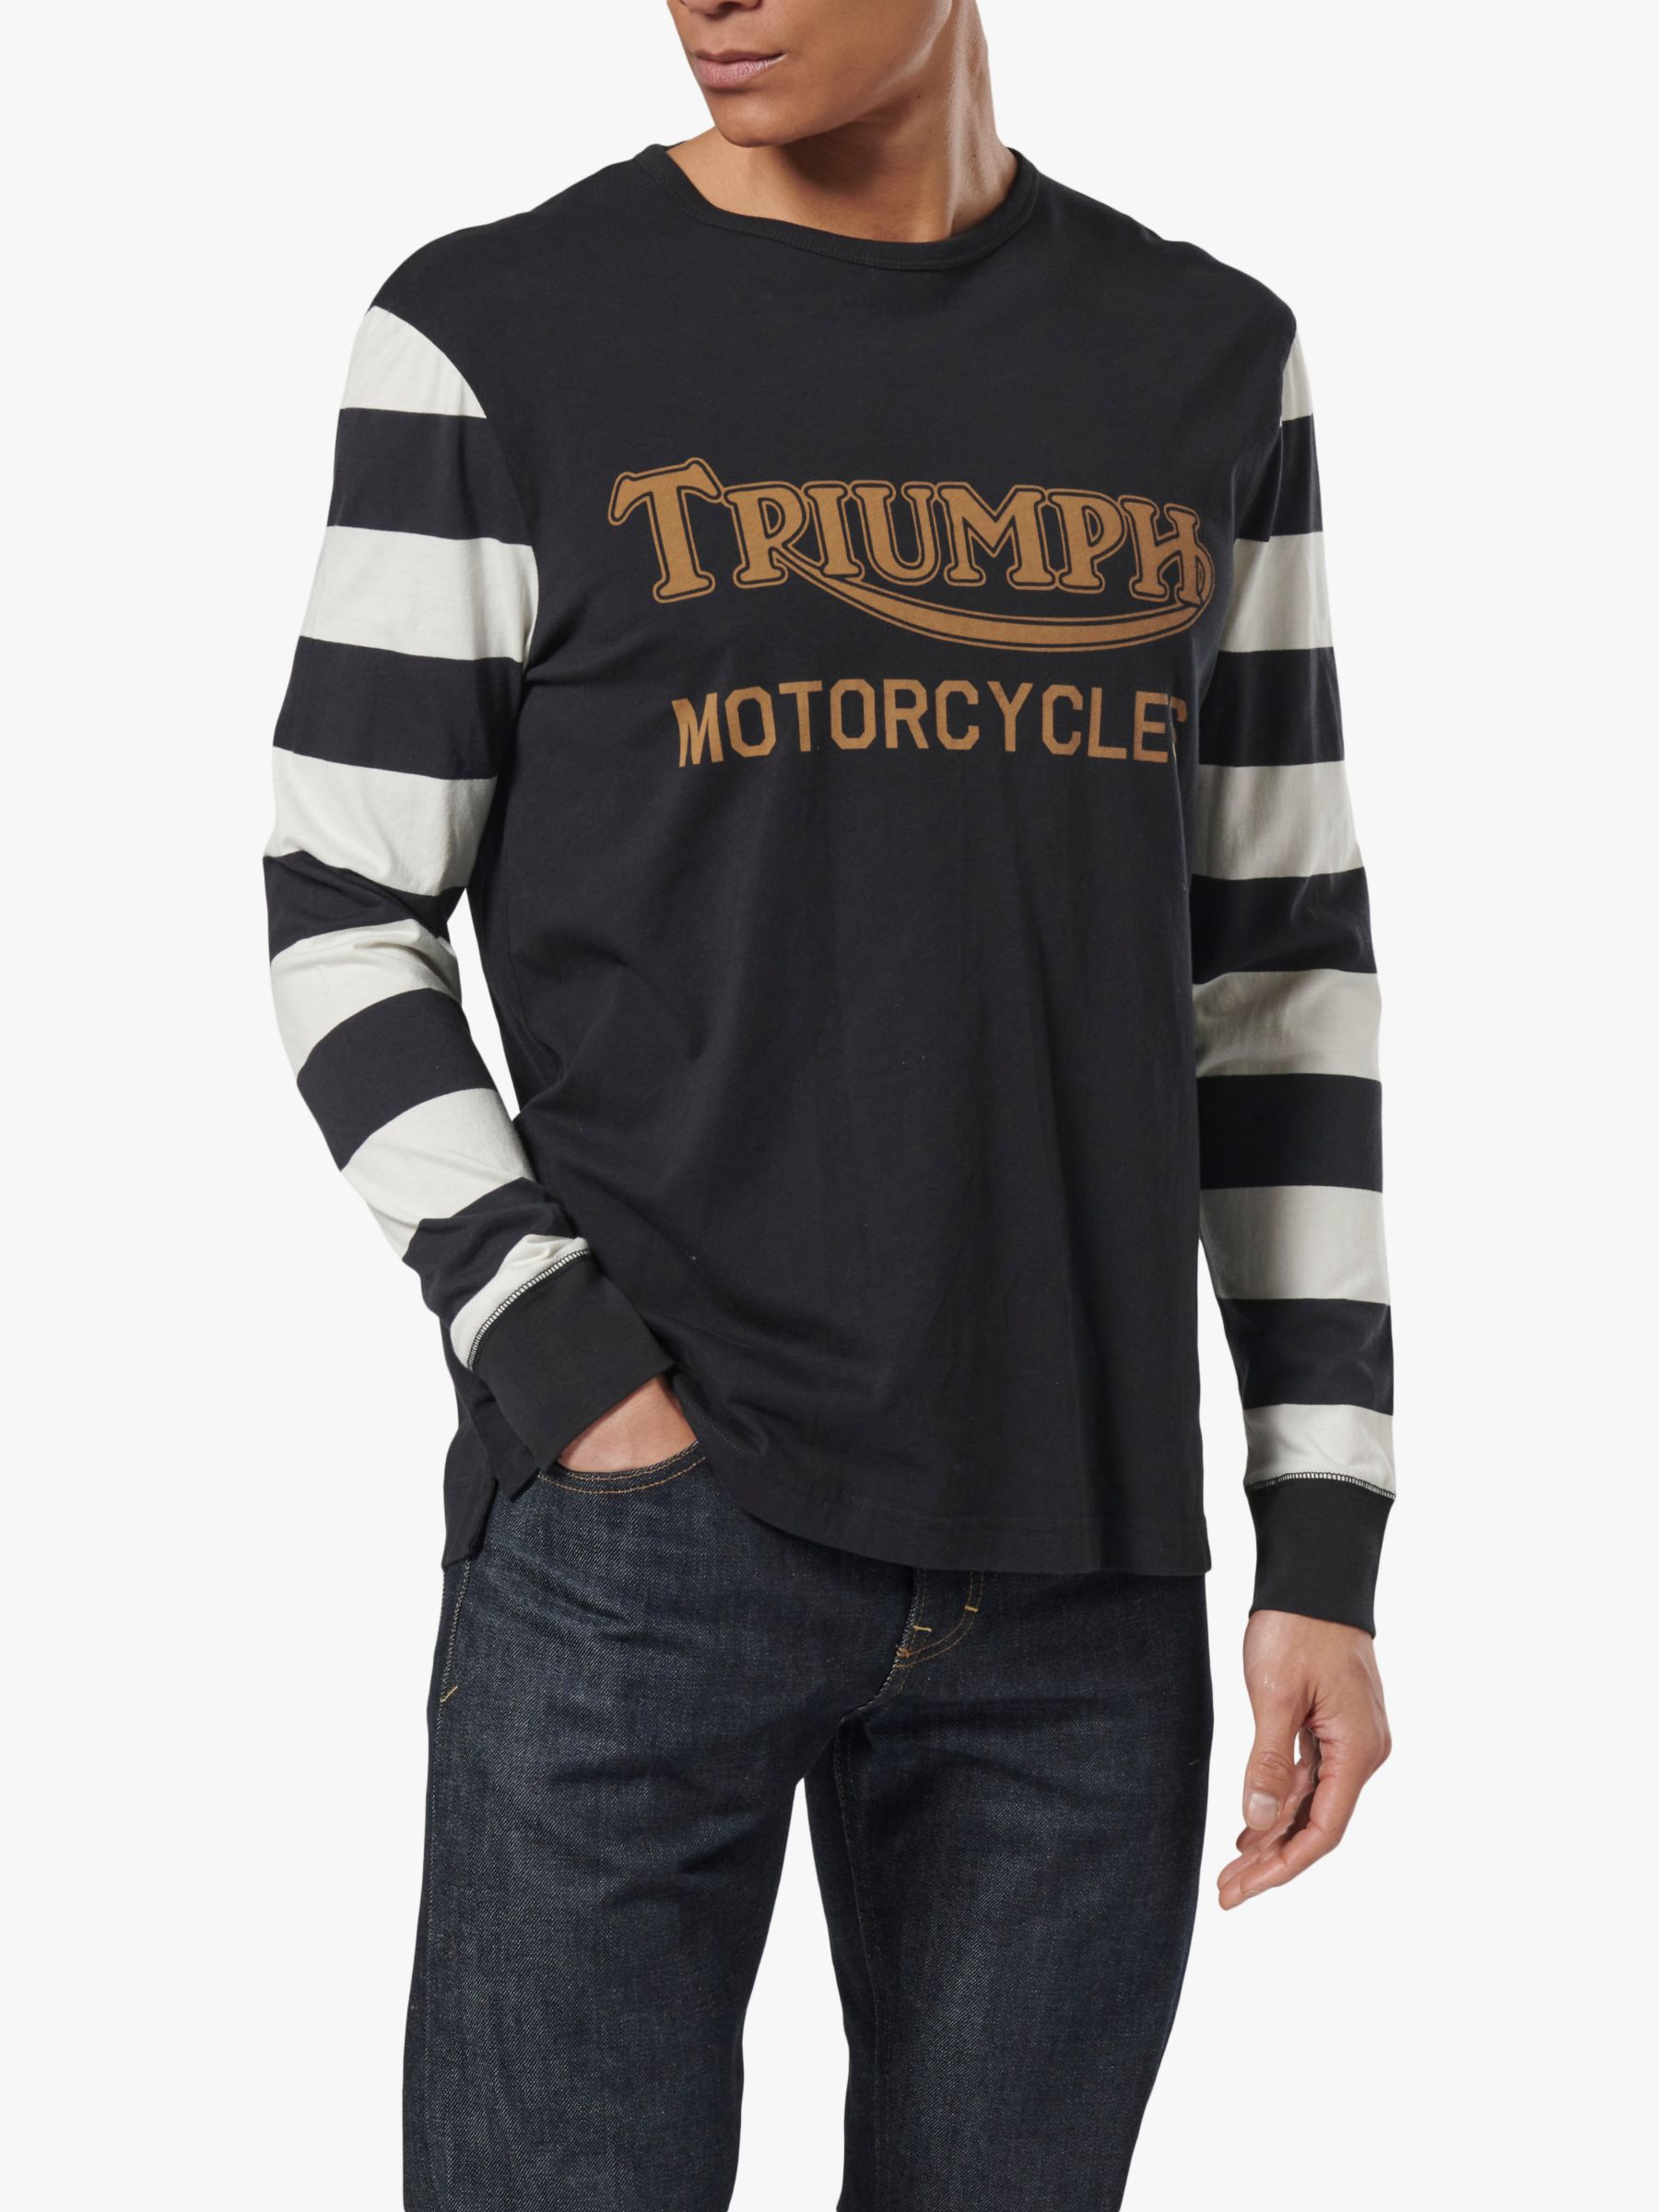 Triumph Motorcycles Ignition Long Sleeve T-Shirt, Black, XL